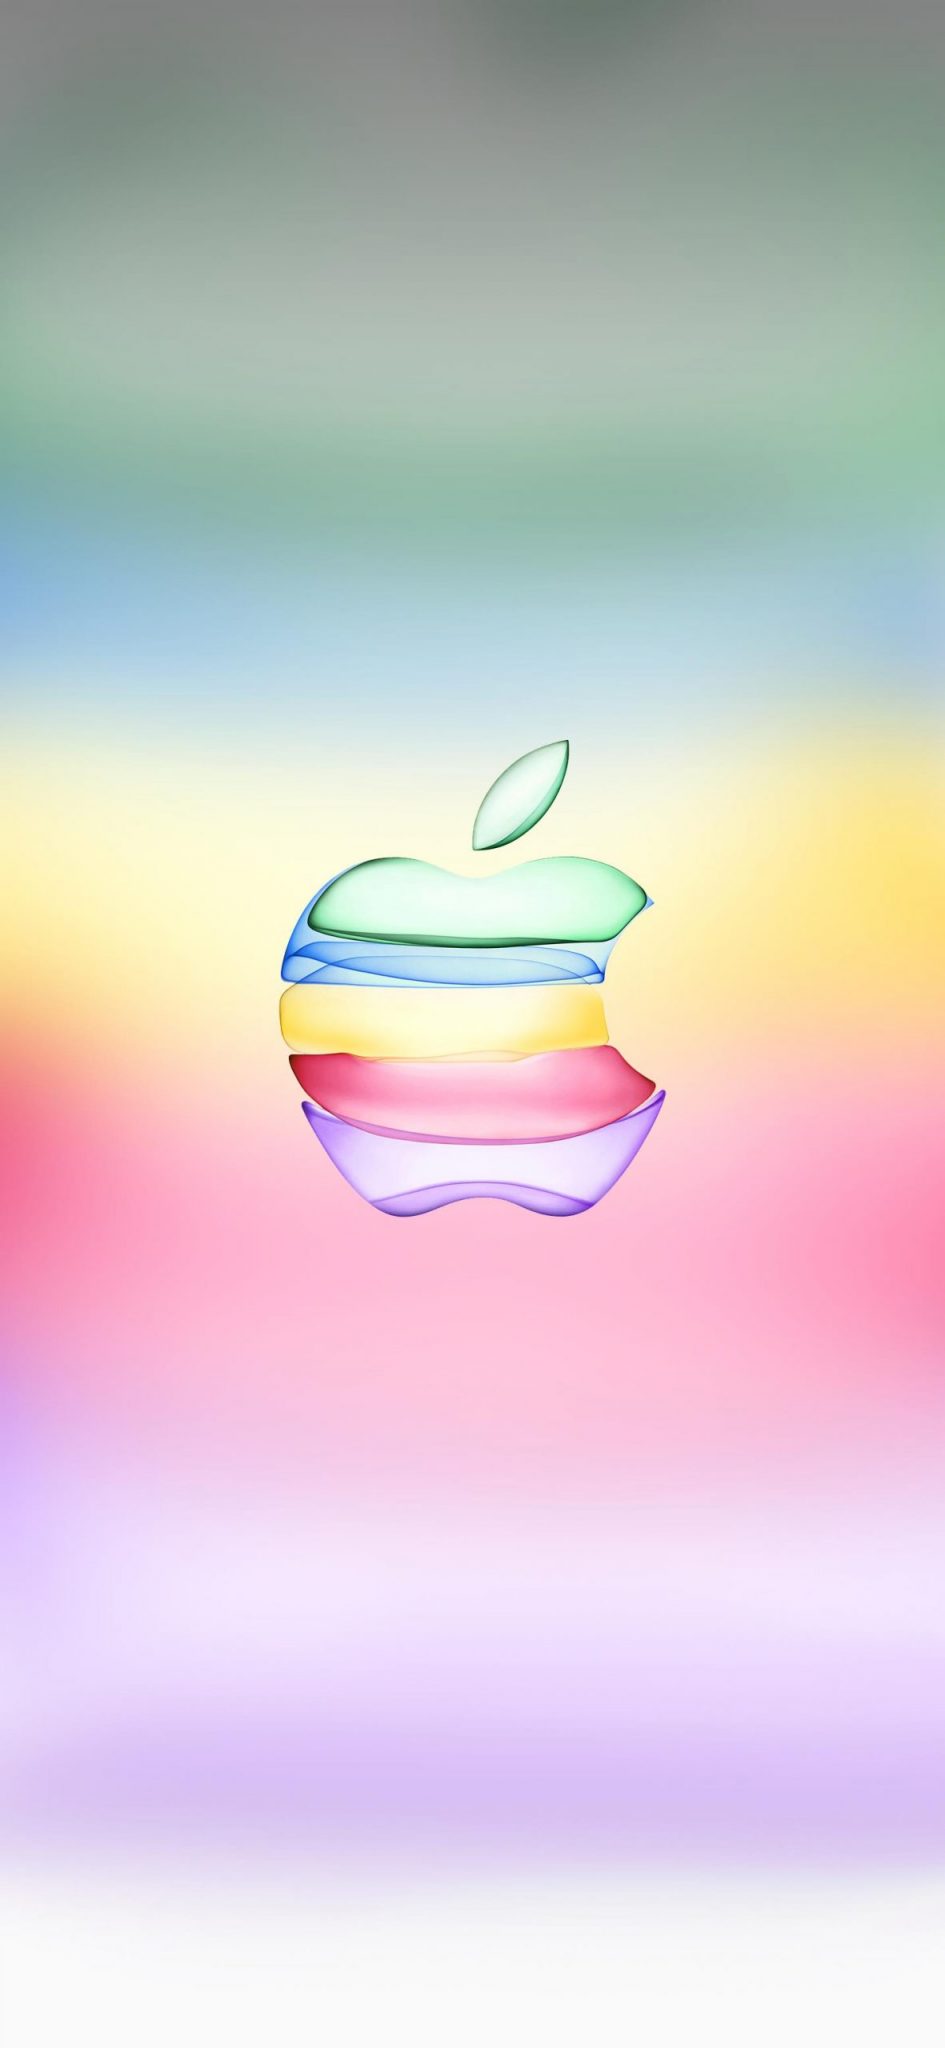 apple-event-2019-wallpaper-02-TechFoogle